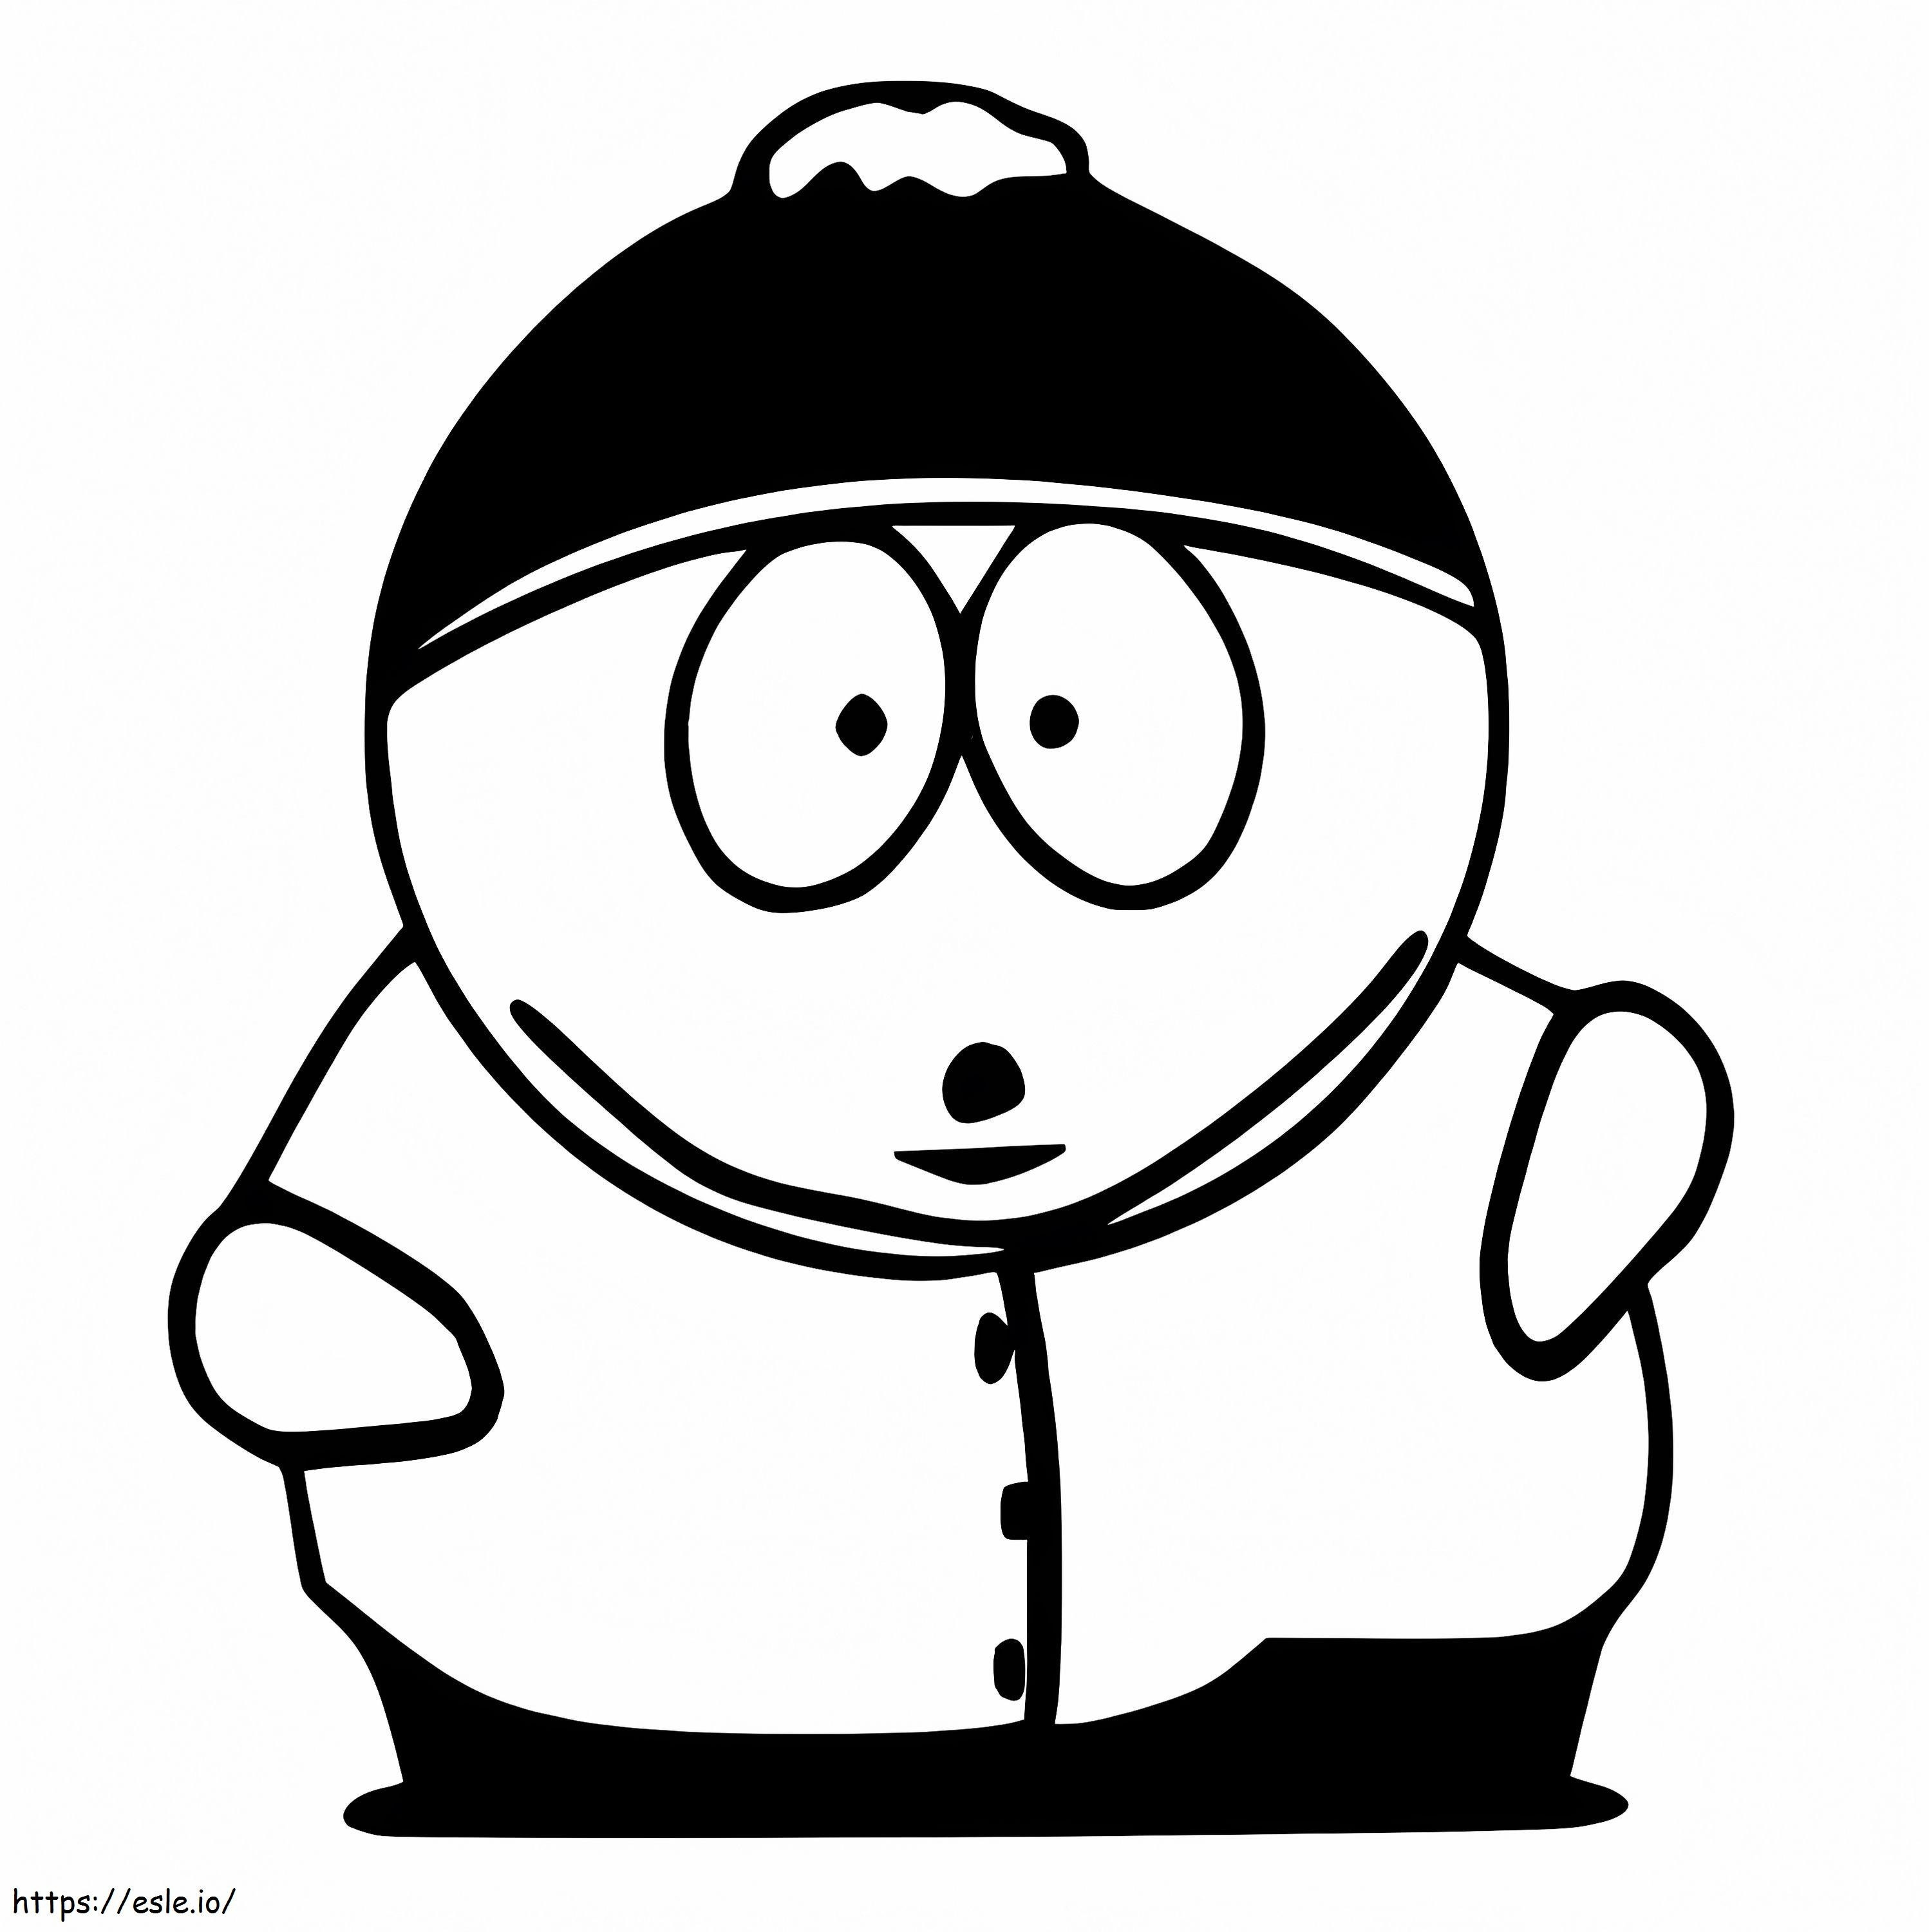 Eric Cartman 1 coloring page